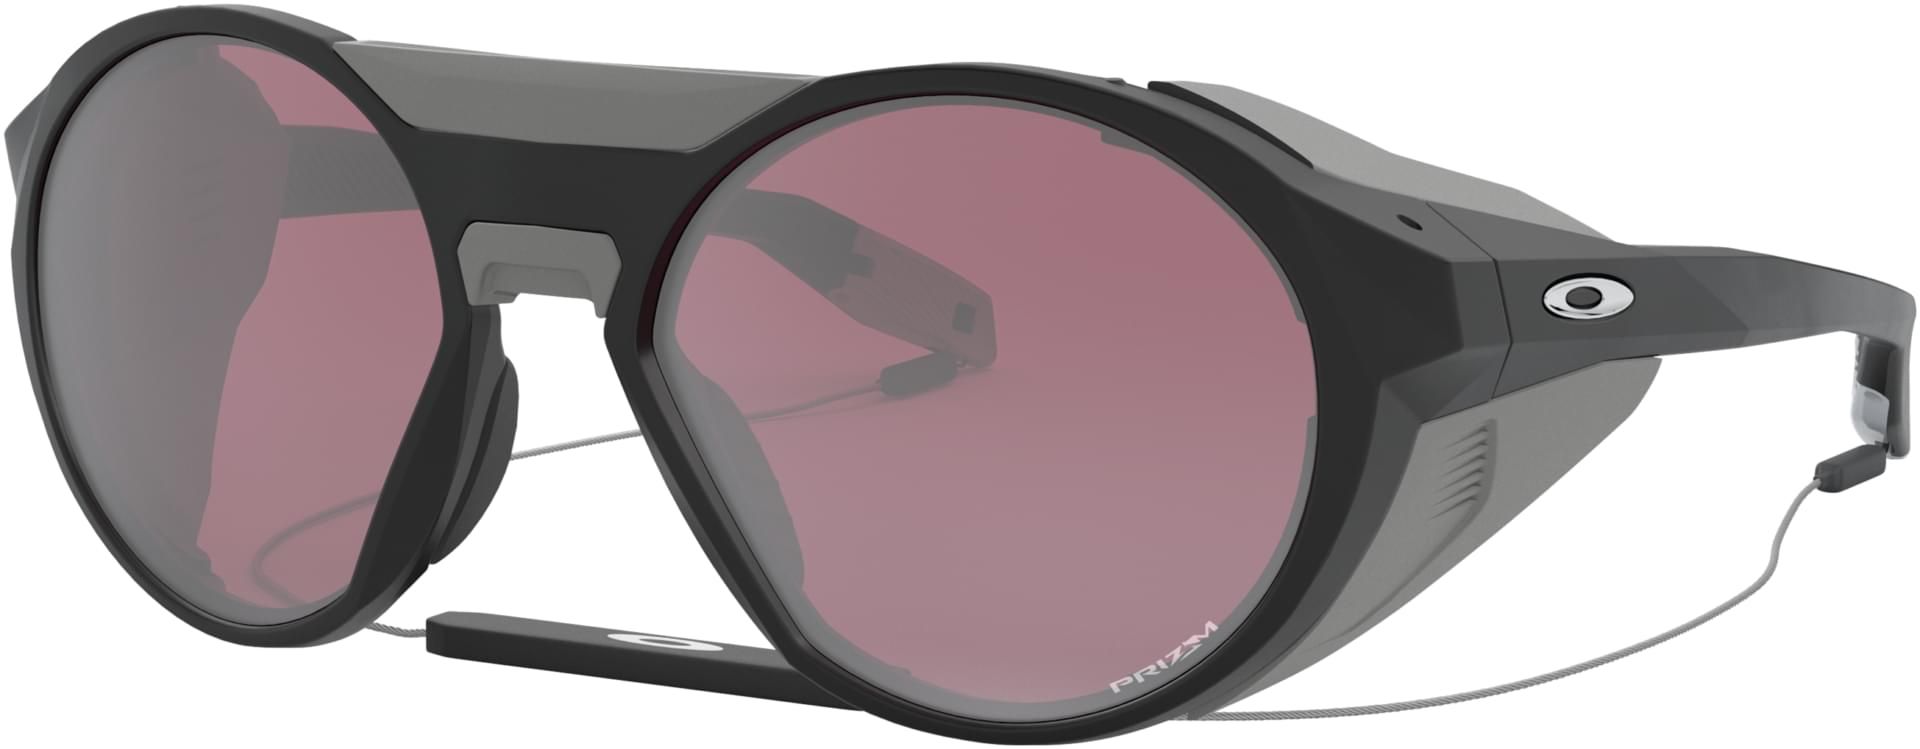 Strike (Category 4) – Evolution Sunglasses